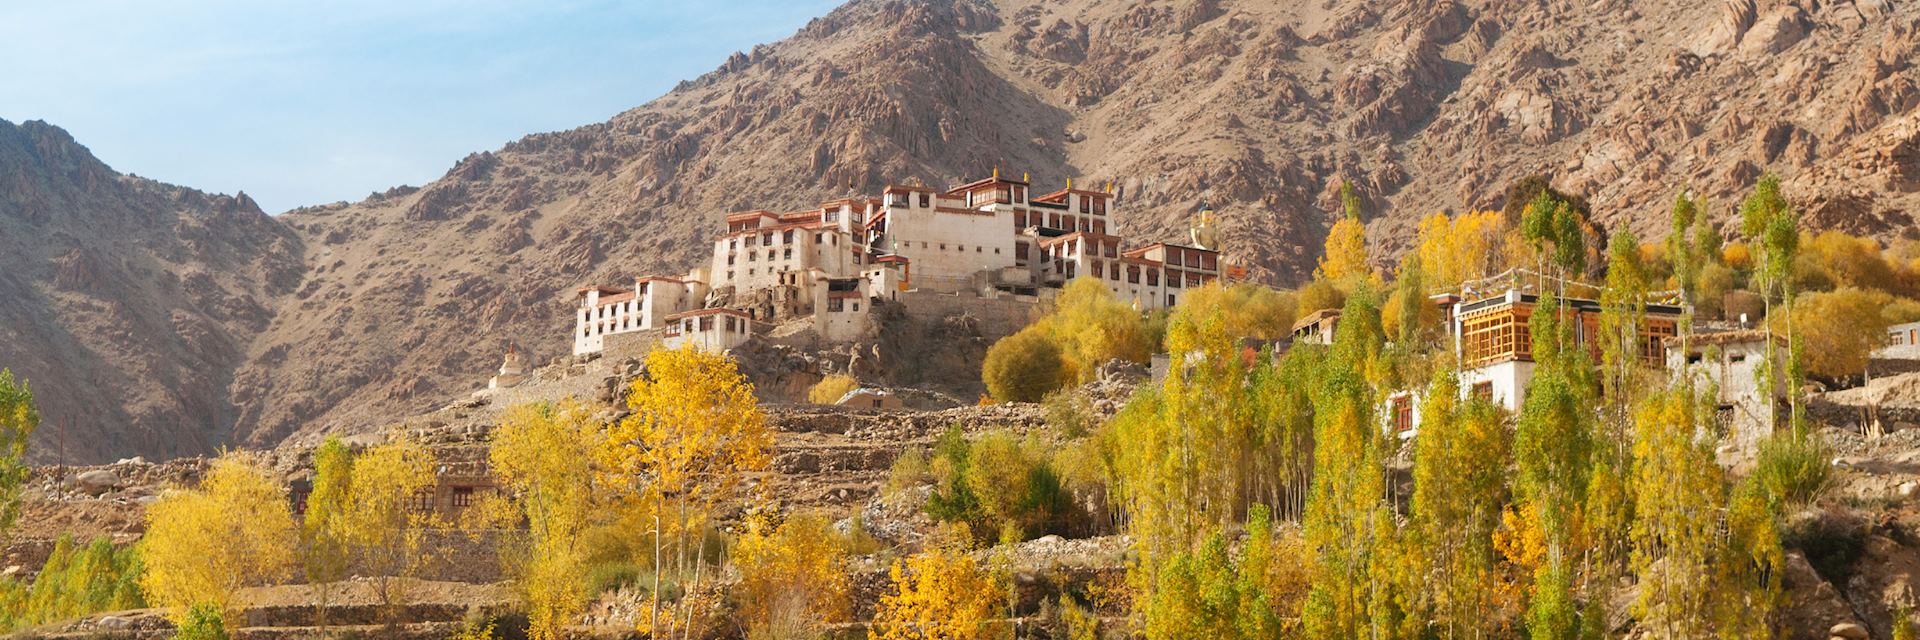 Ladakh highlights, Travel guide